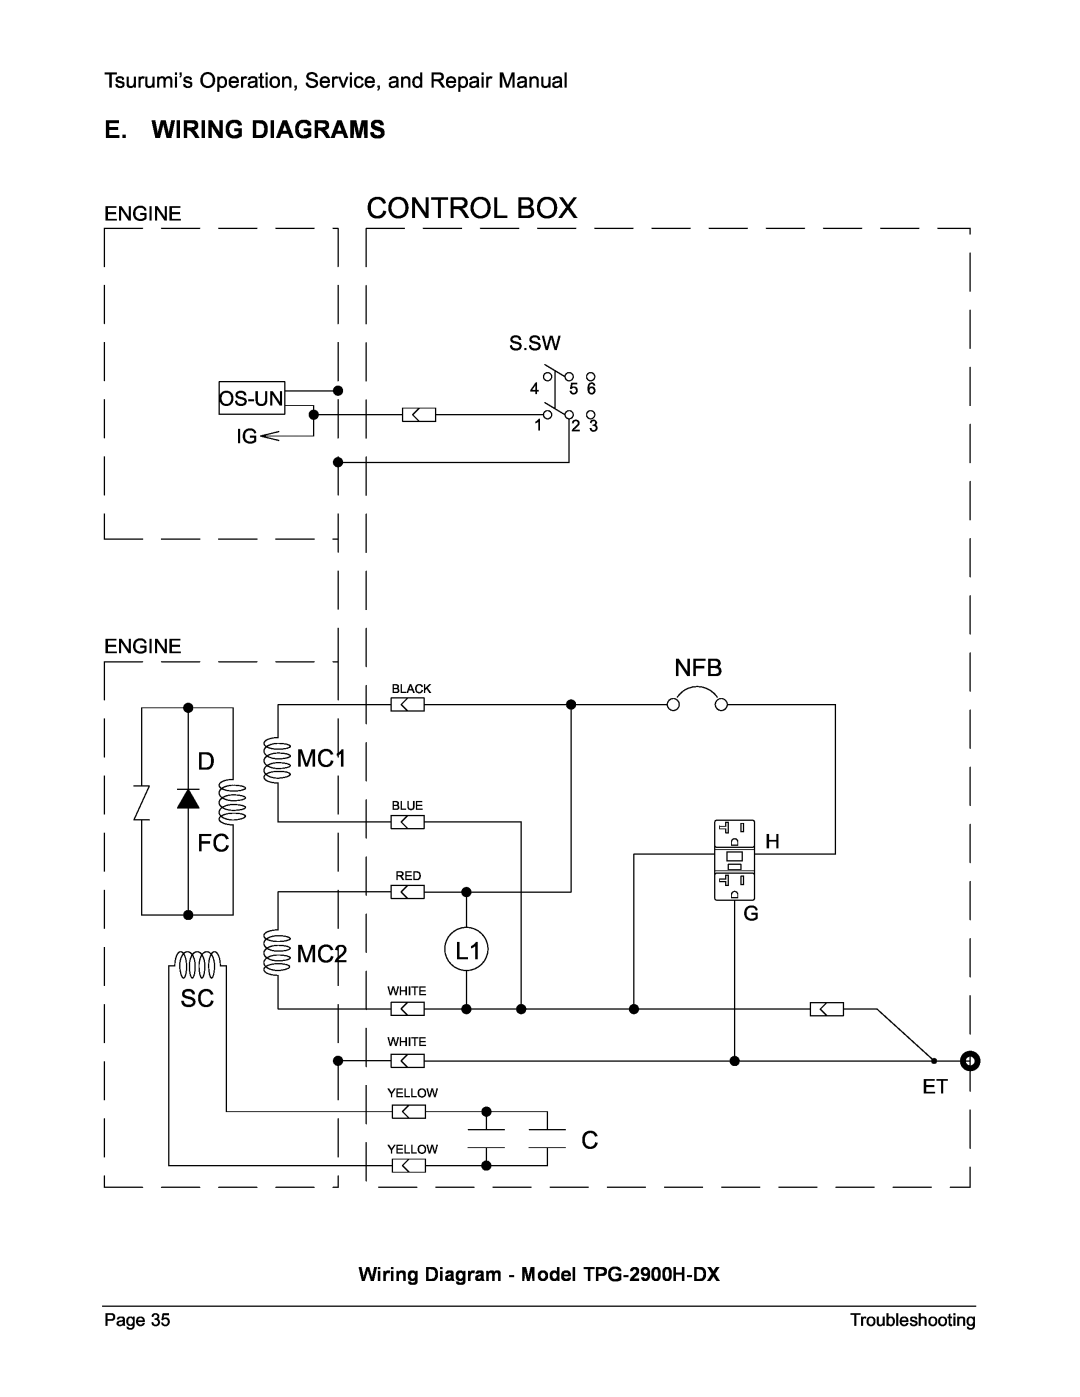 Honda Power Equipment TPG-6000H-DX manual E. Wiring Diagrams, Control Box, Tsurumi’s Operation, Service, and Repair Manual 